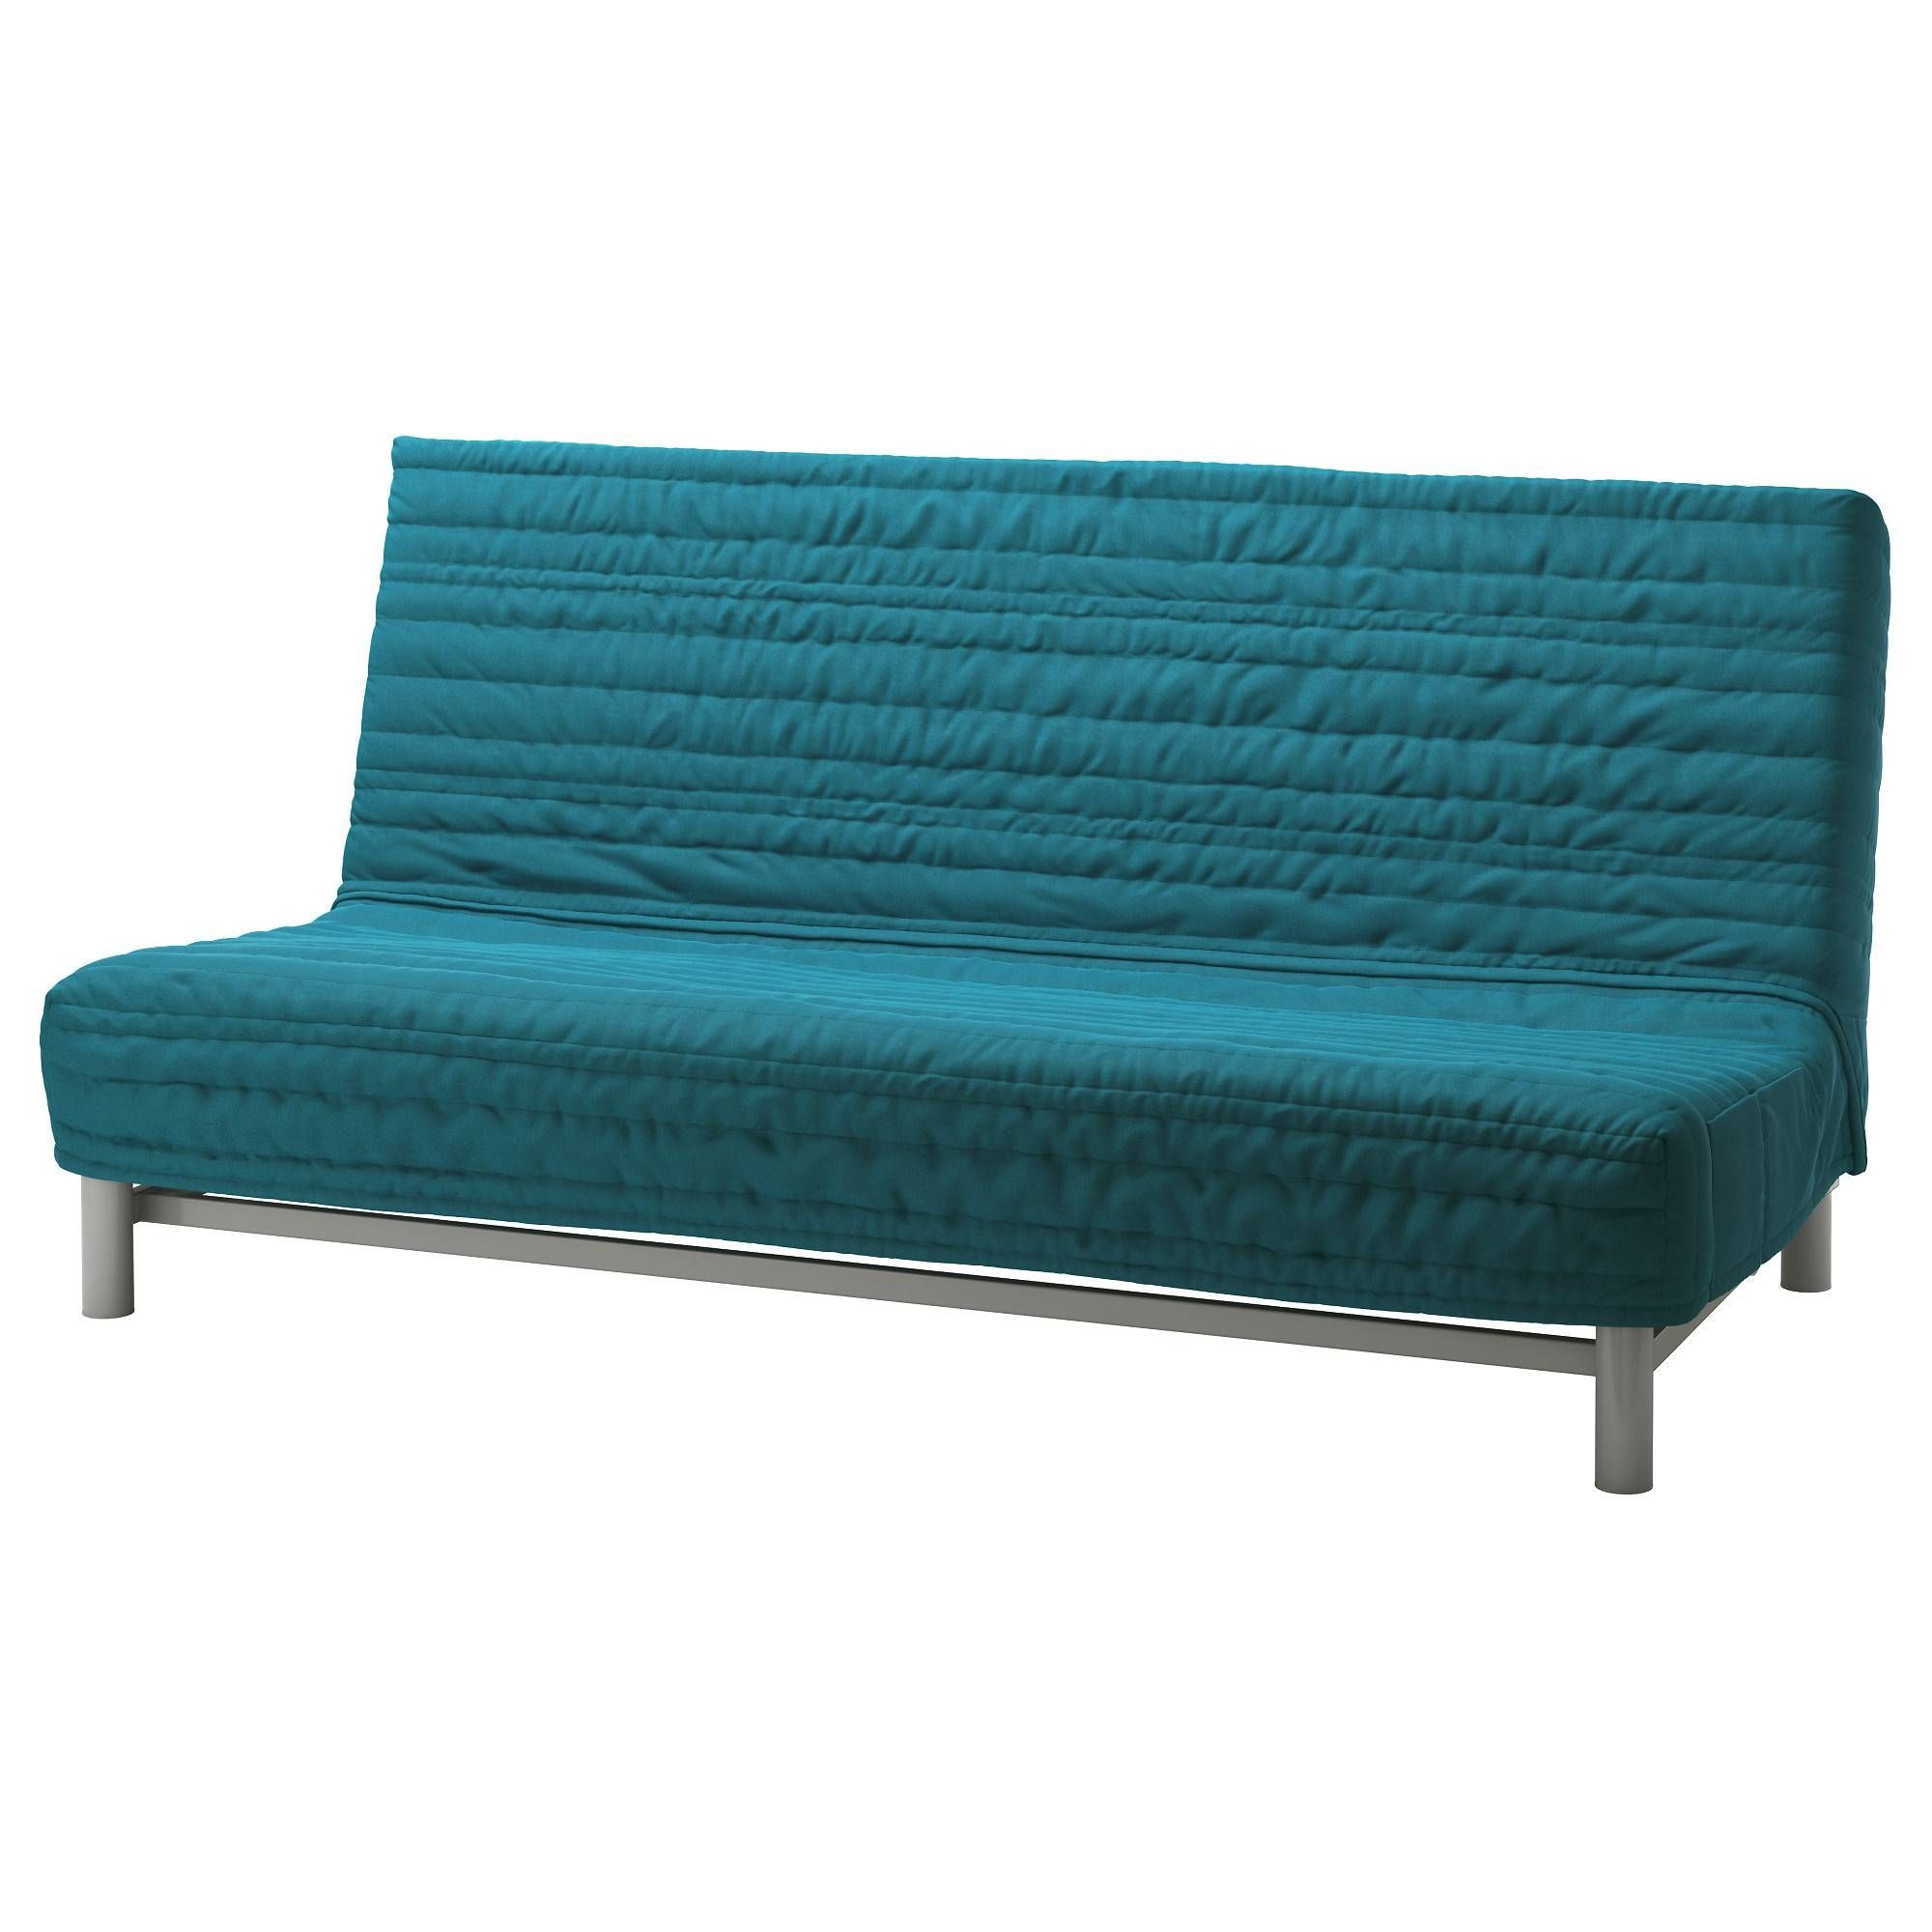 Beddinge Lövås Sleeper Sofa – Knisa Turquoise – Ikea Inside Aqua Sofa Beds (View 3 of 30)